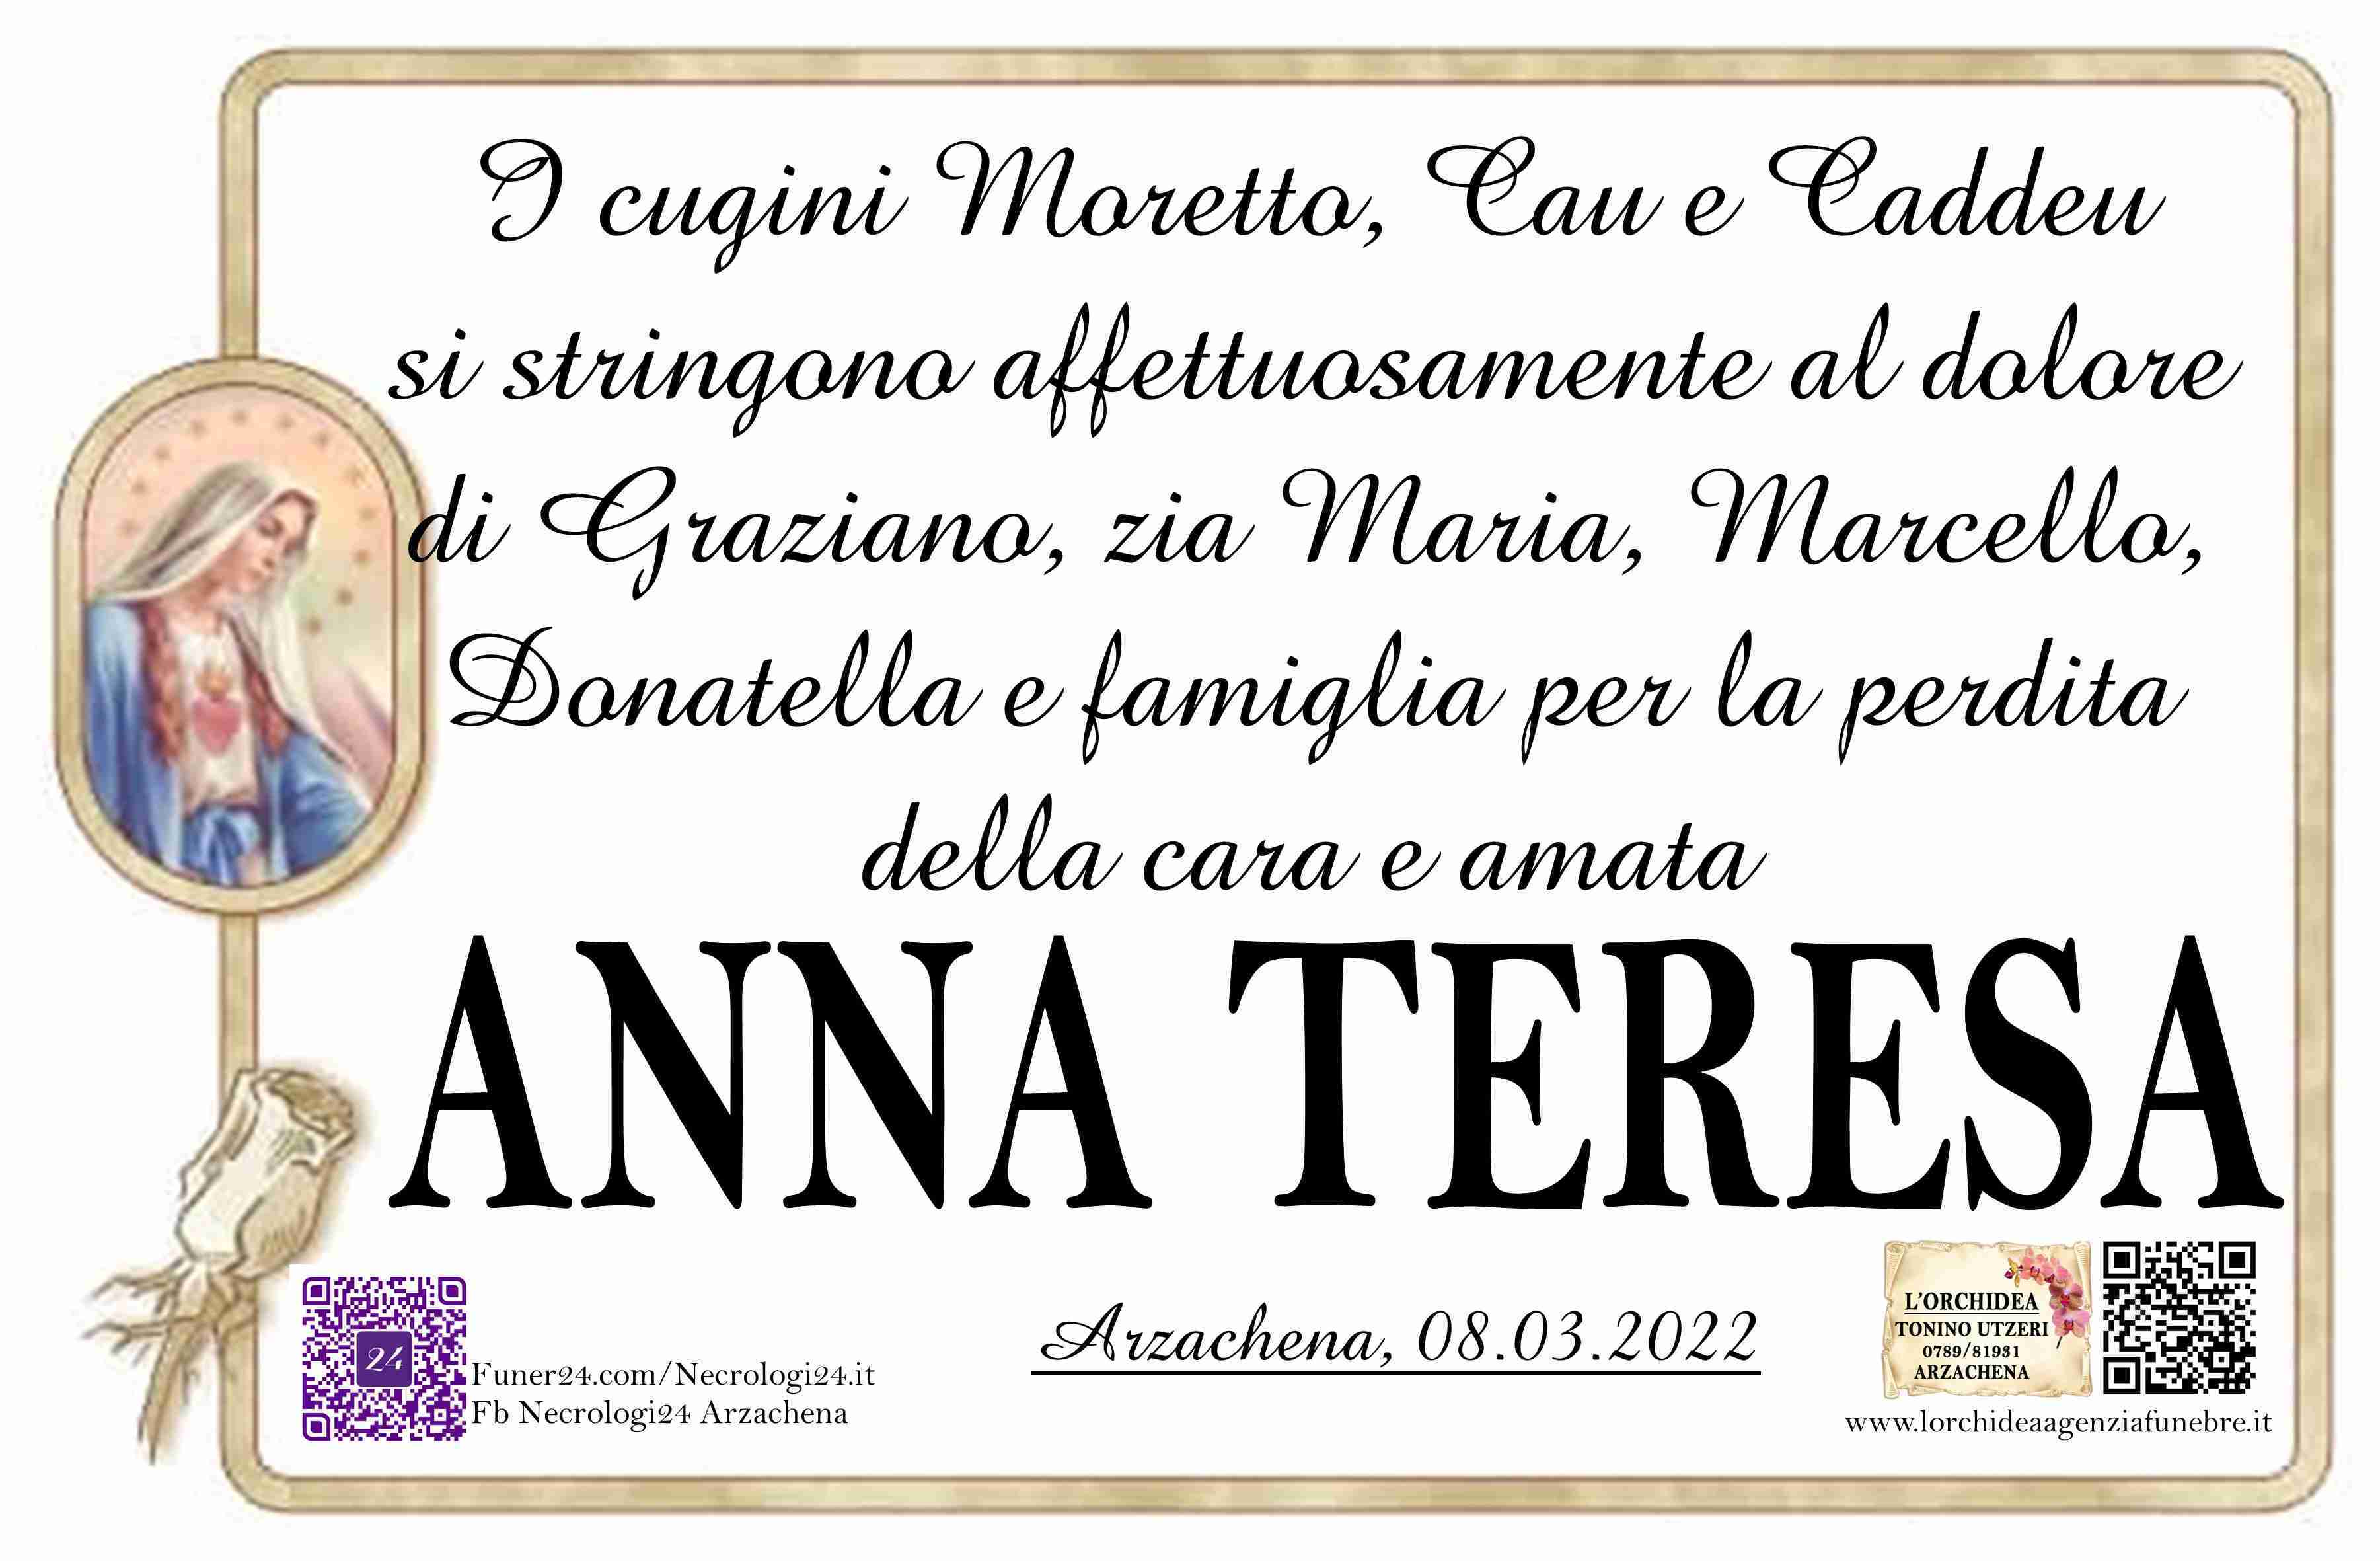 Anna Teresa Moretto